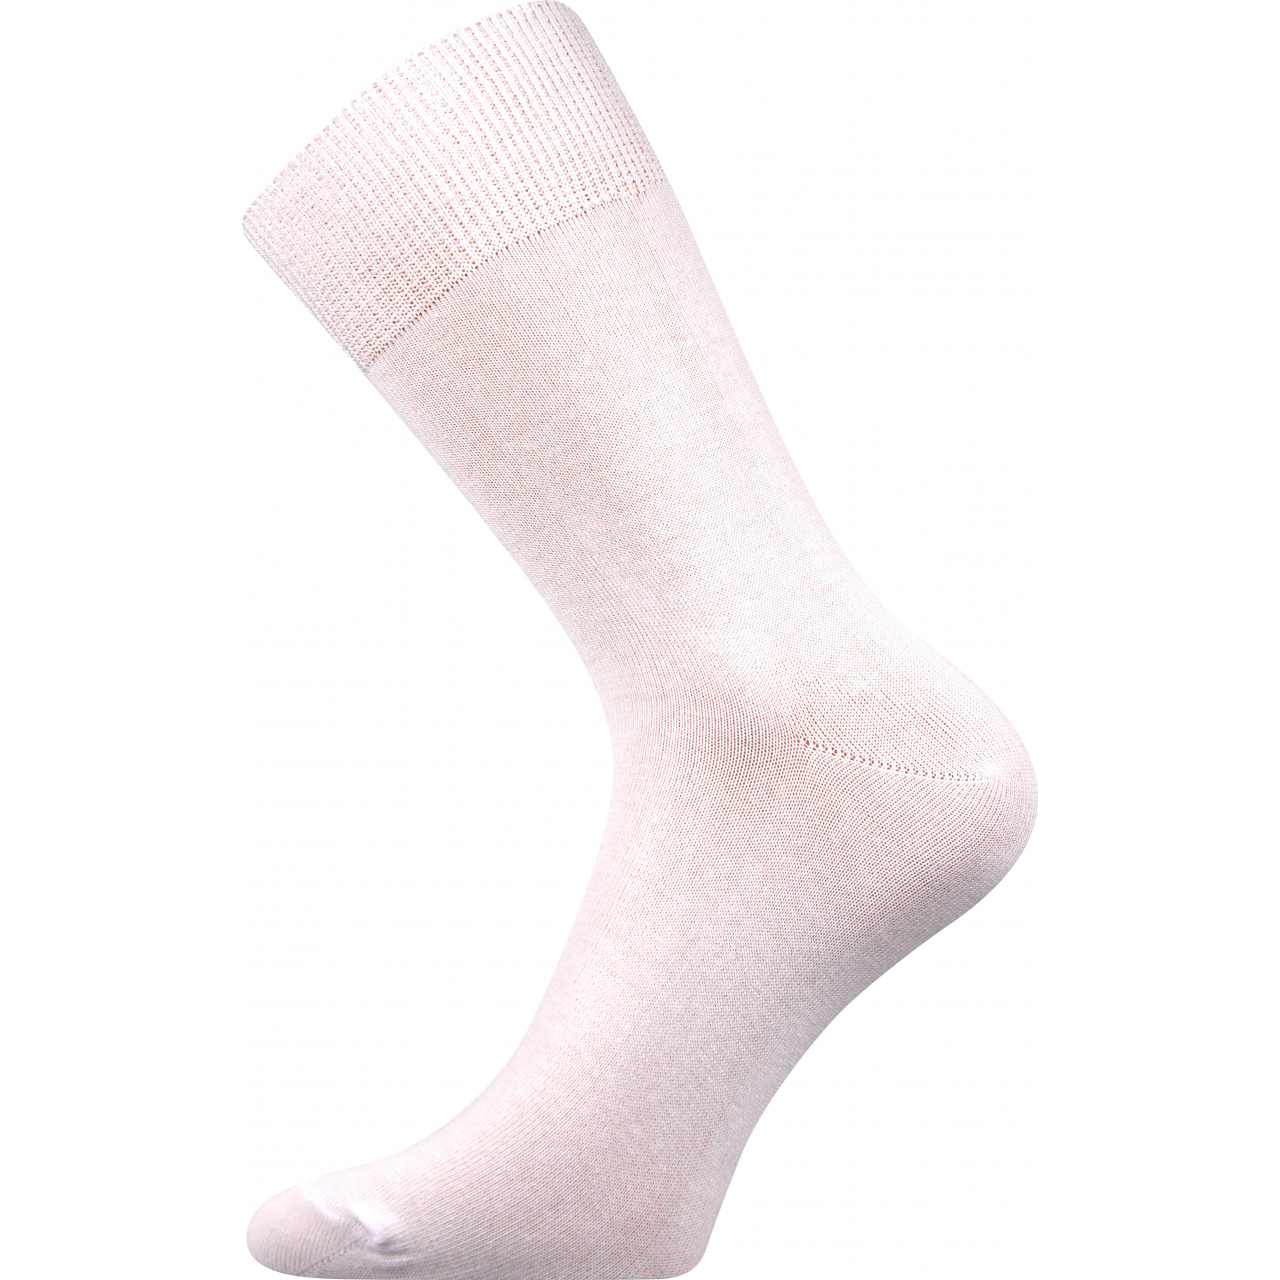 Ponožky unisex klasické Boma Radovan-a - bílé, 39-42